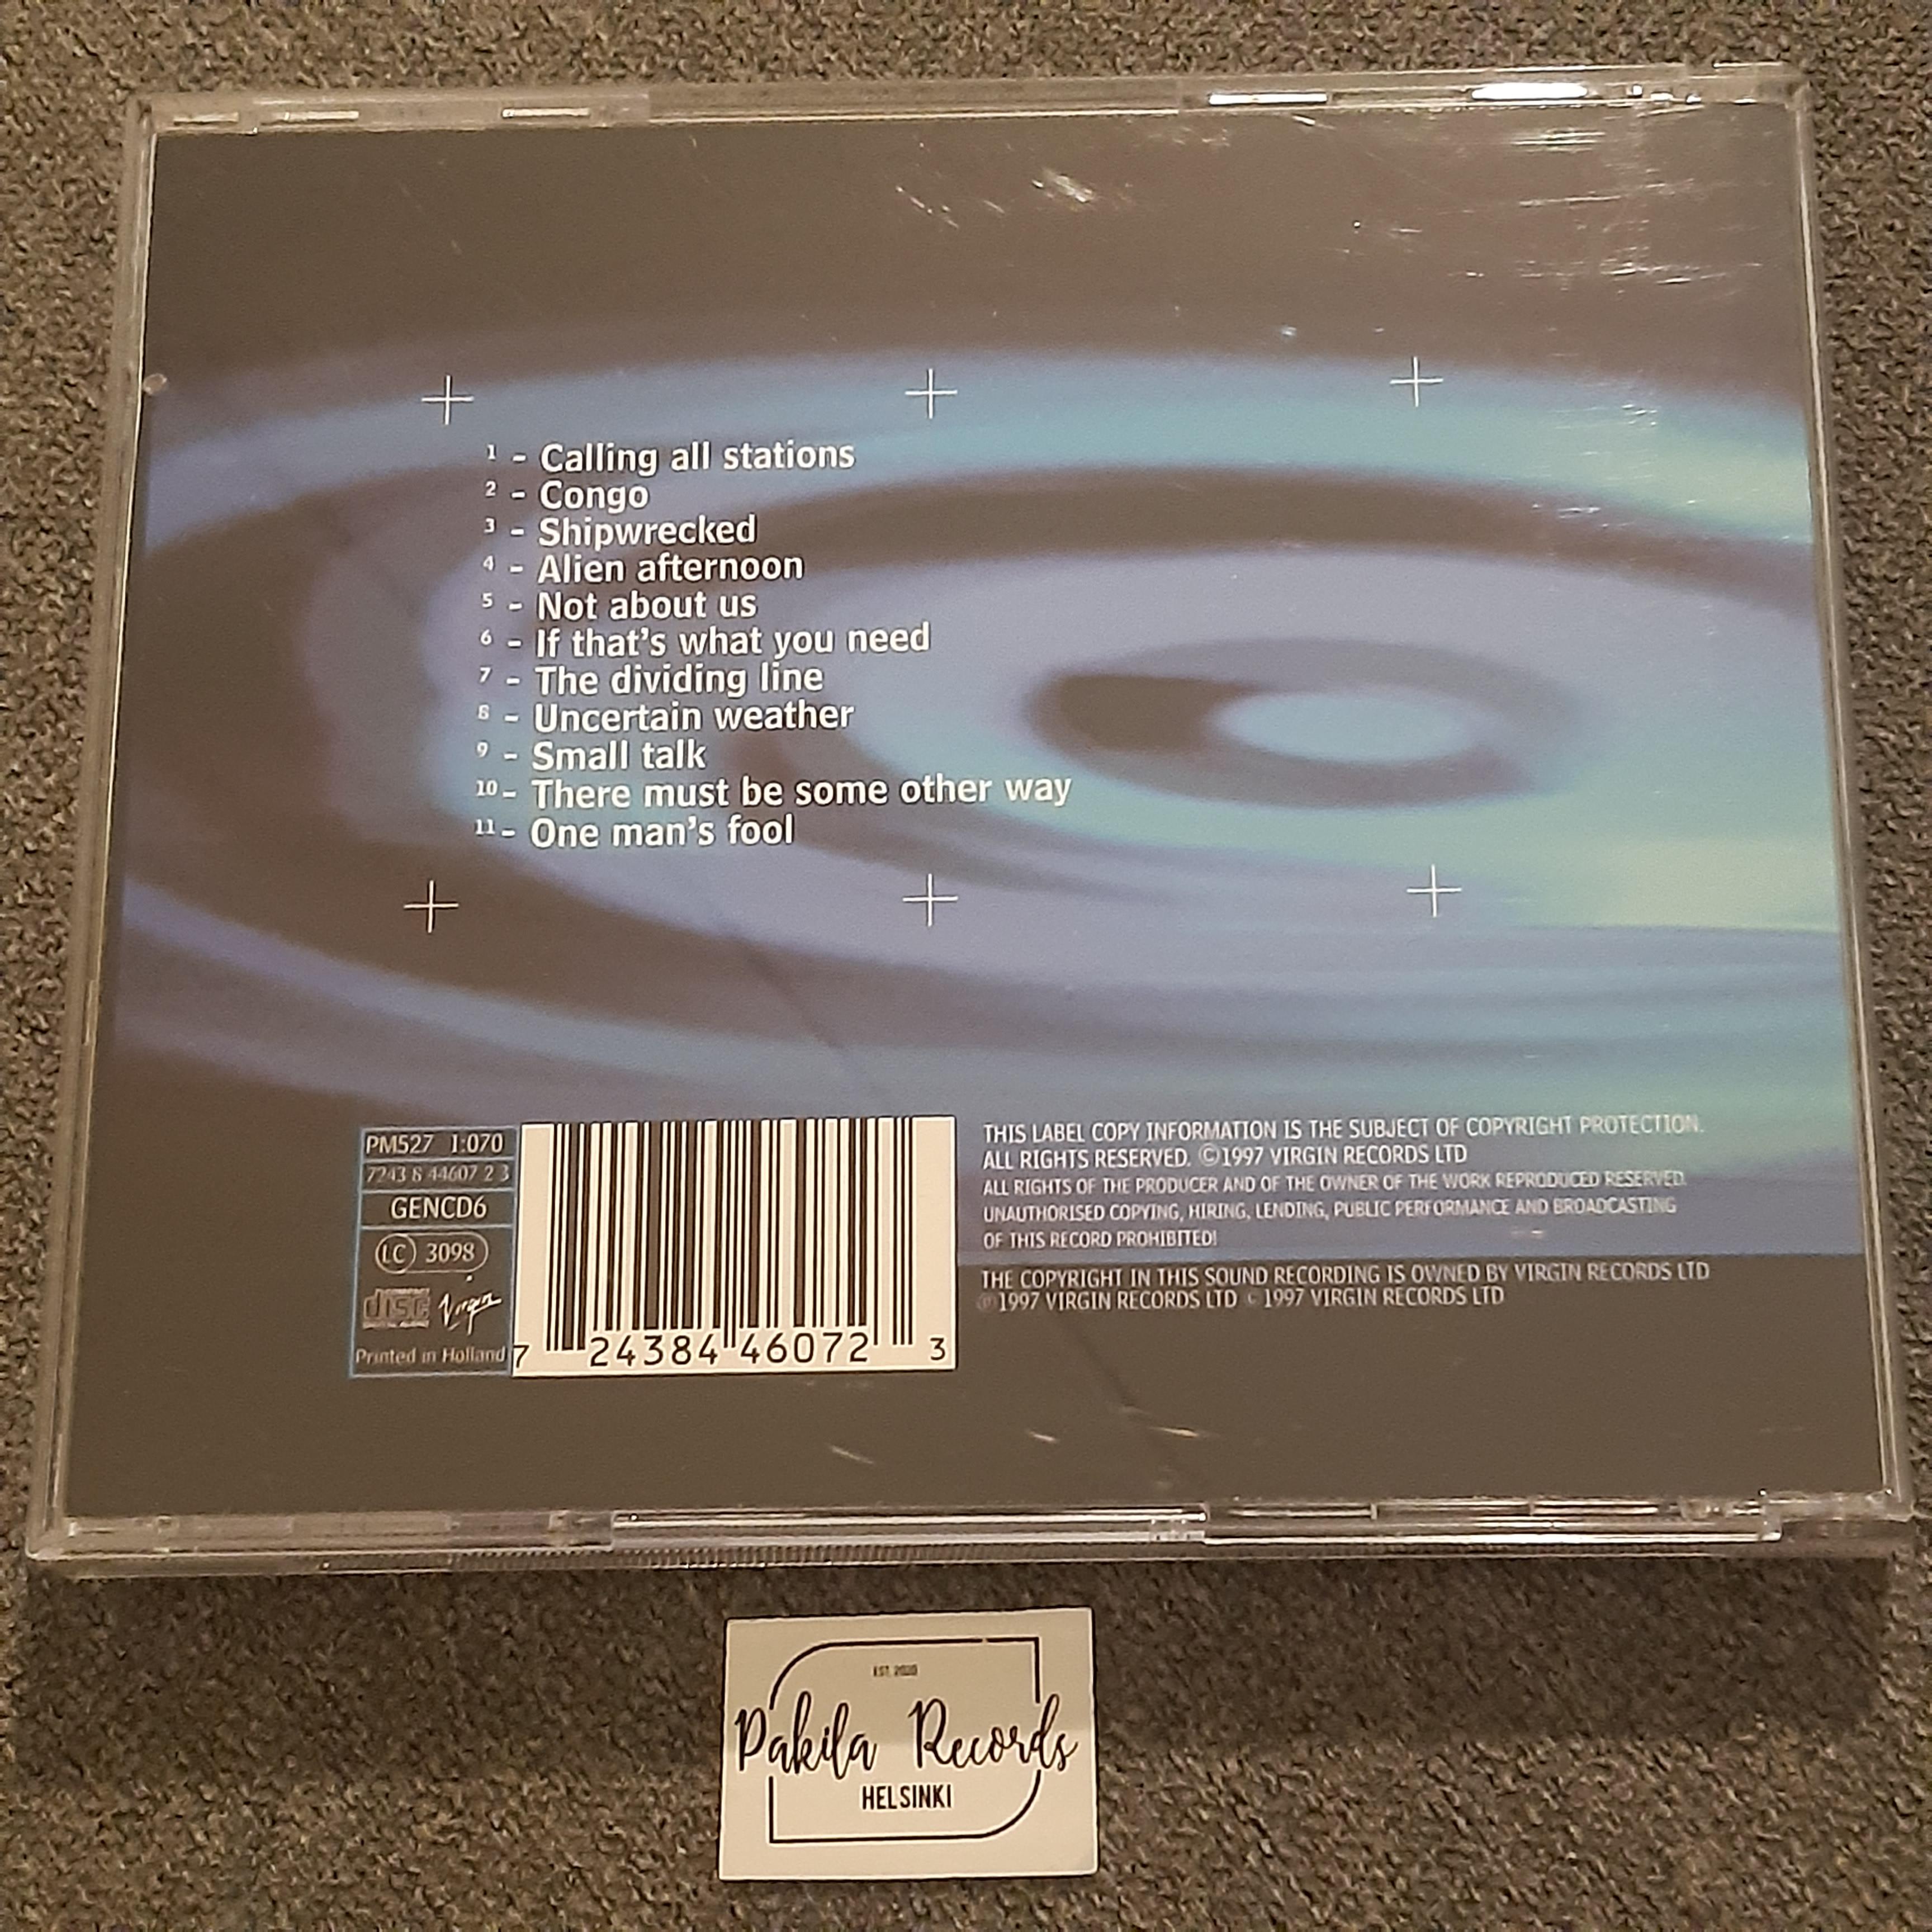 Genesis - Calling All Stations - CD (käytetty)